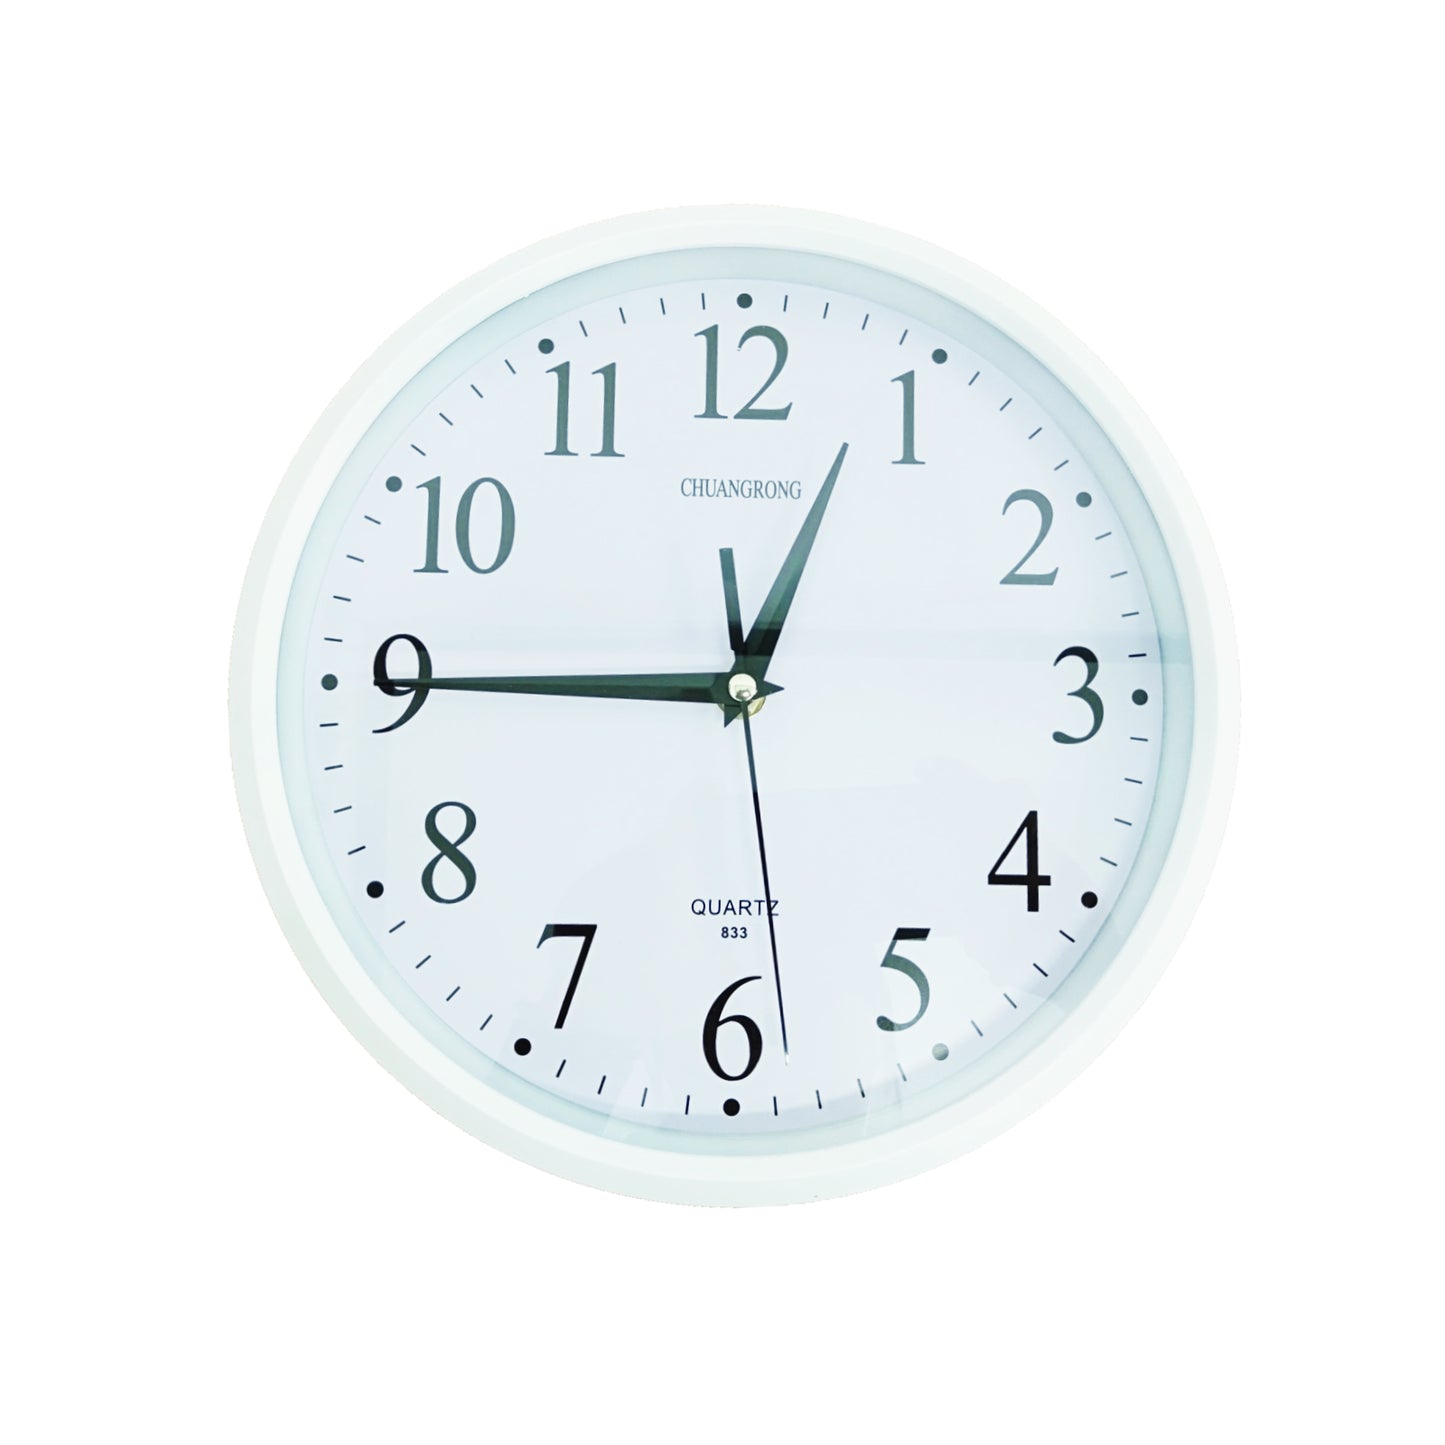 Concise Silent Non-Ticking Wall Clock Quartz- 24cm - Homeware Discounts